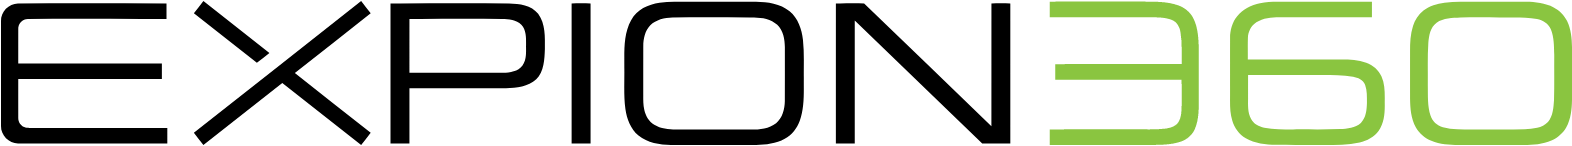 Expion360 logo large (transparent PNG)